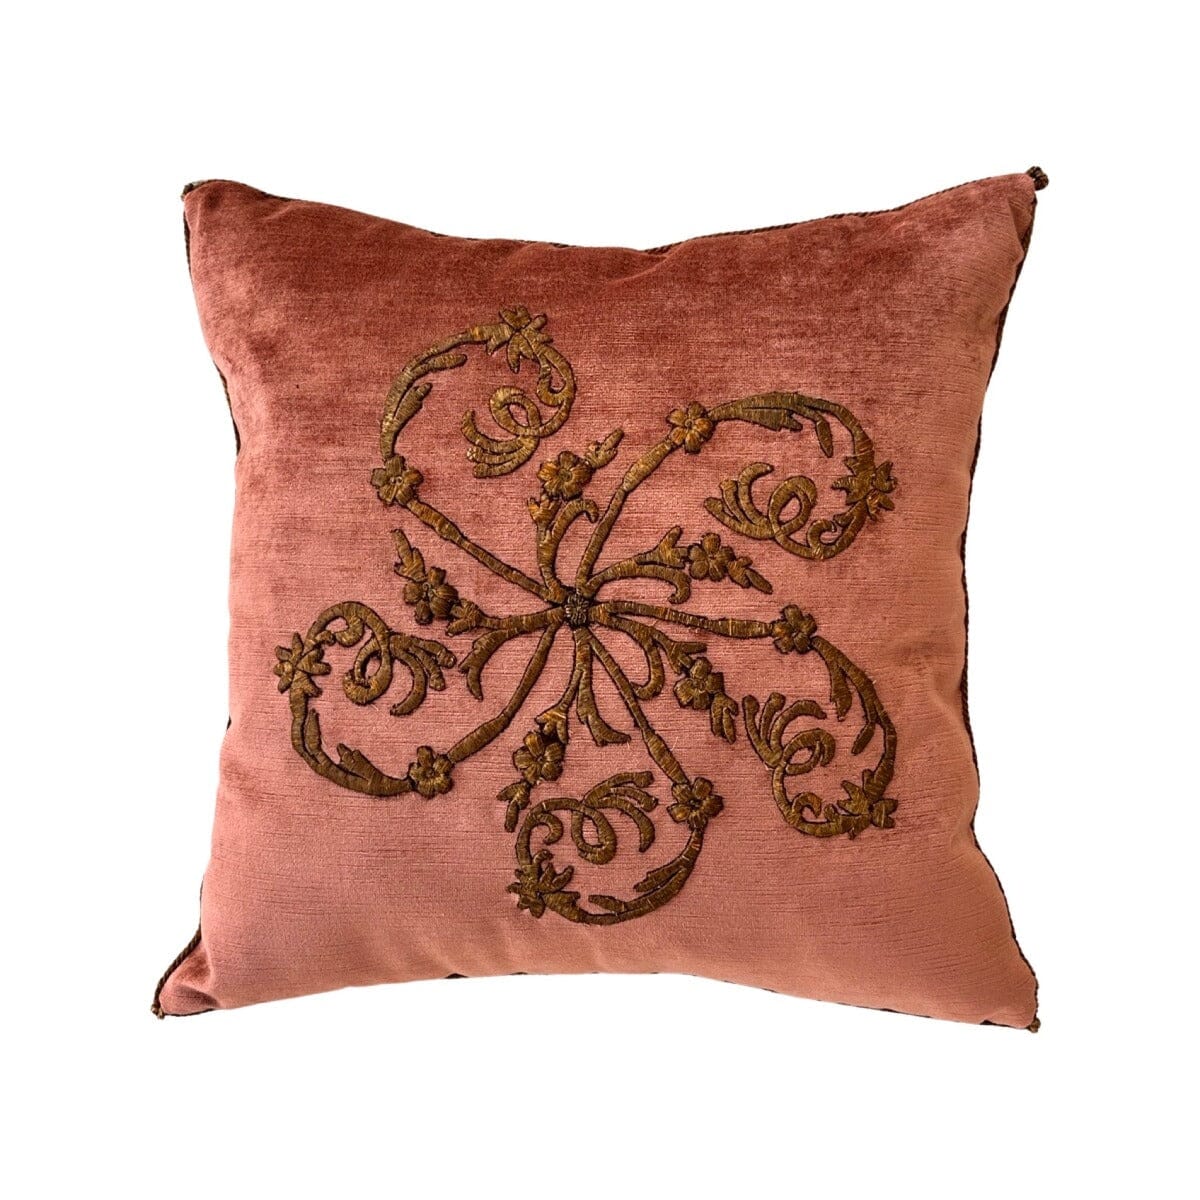 Antique Ottoman Empire Raised Gold Metallic Embroidery (#E112922 | 18 x 18") Pillows B. Viz Design 